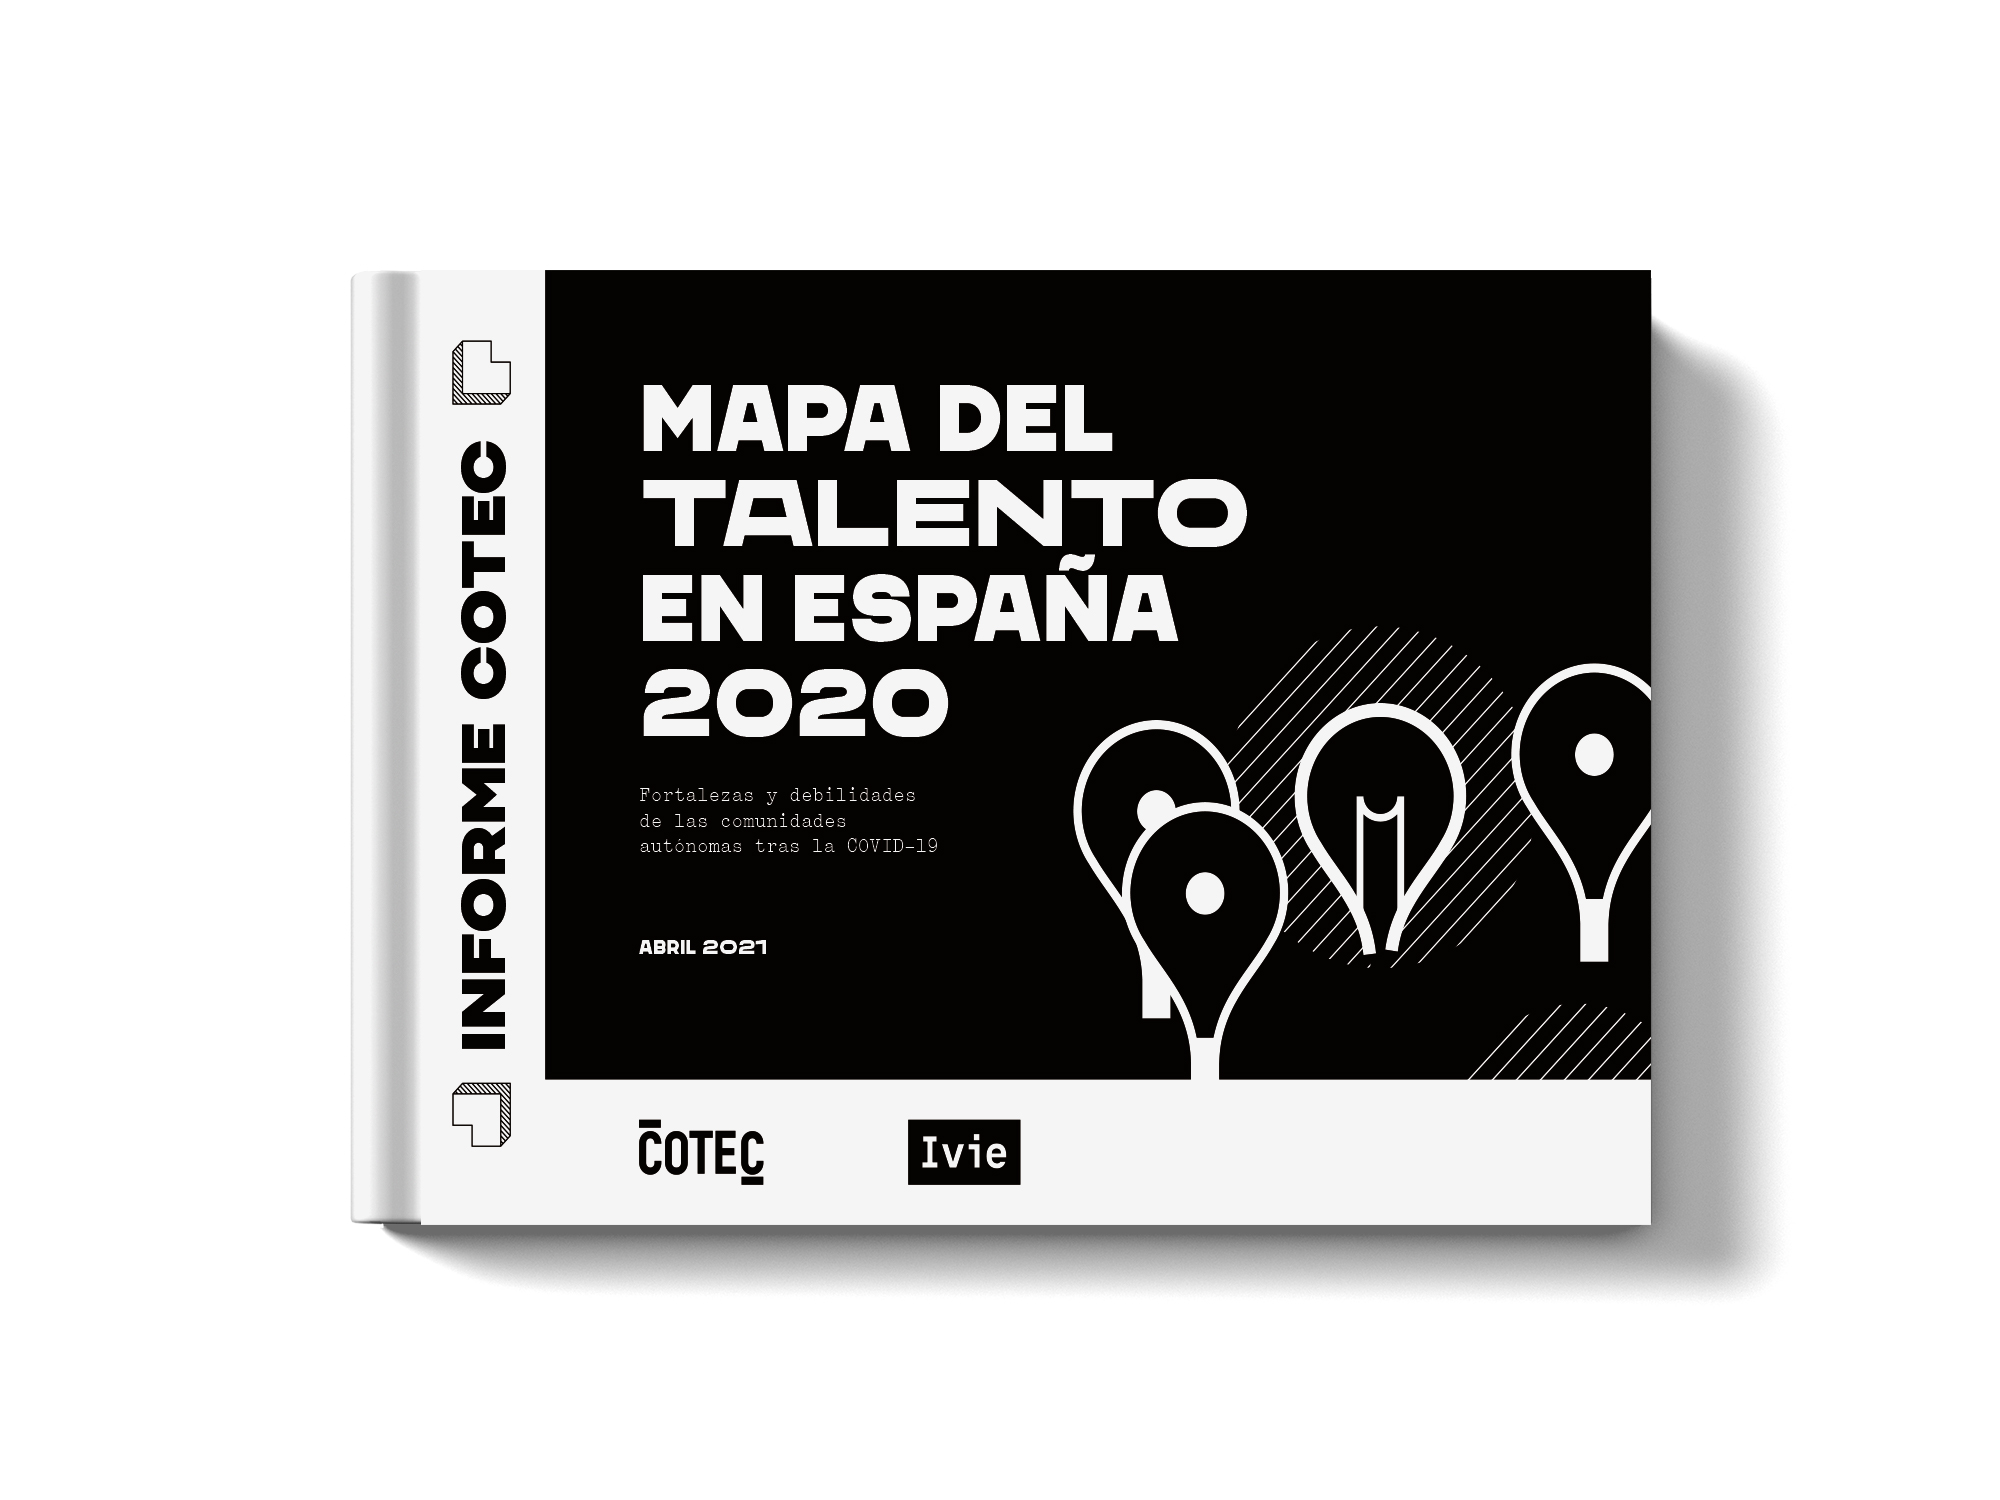 Talent attraction and retention capacity of Spanish autonomous communities